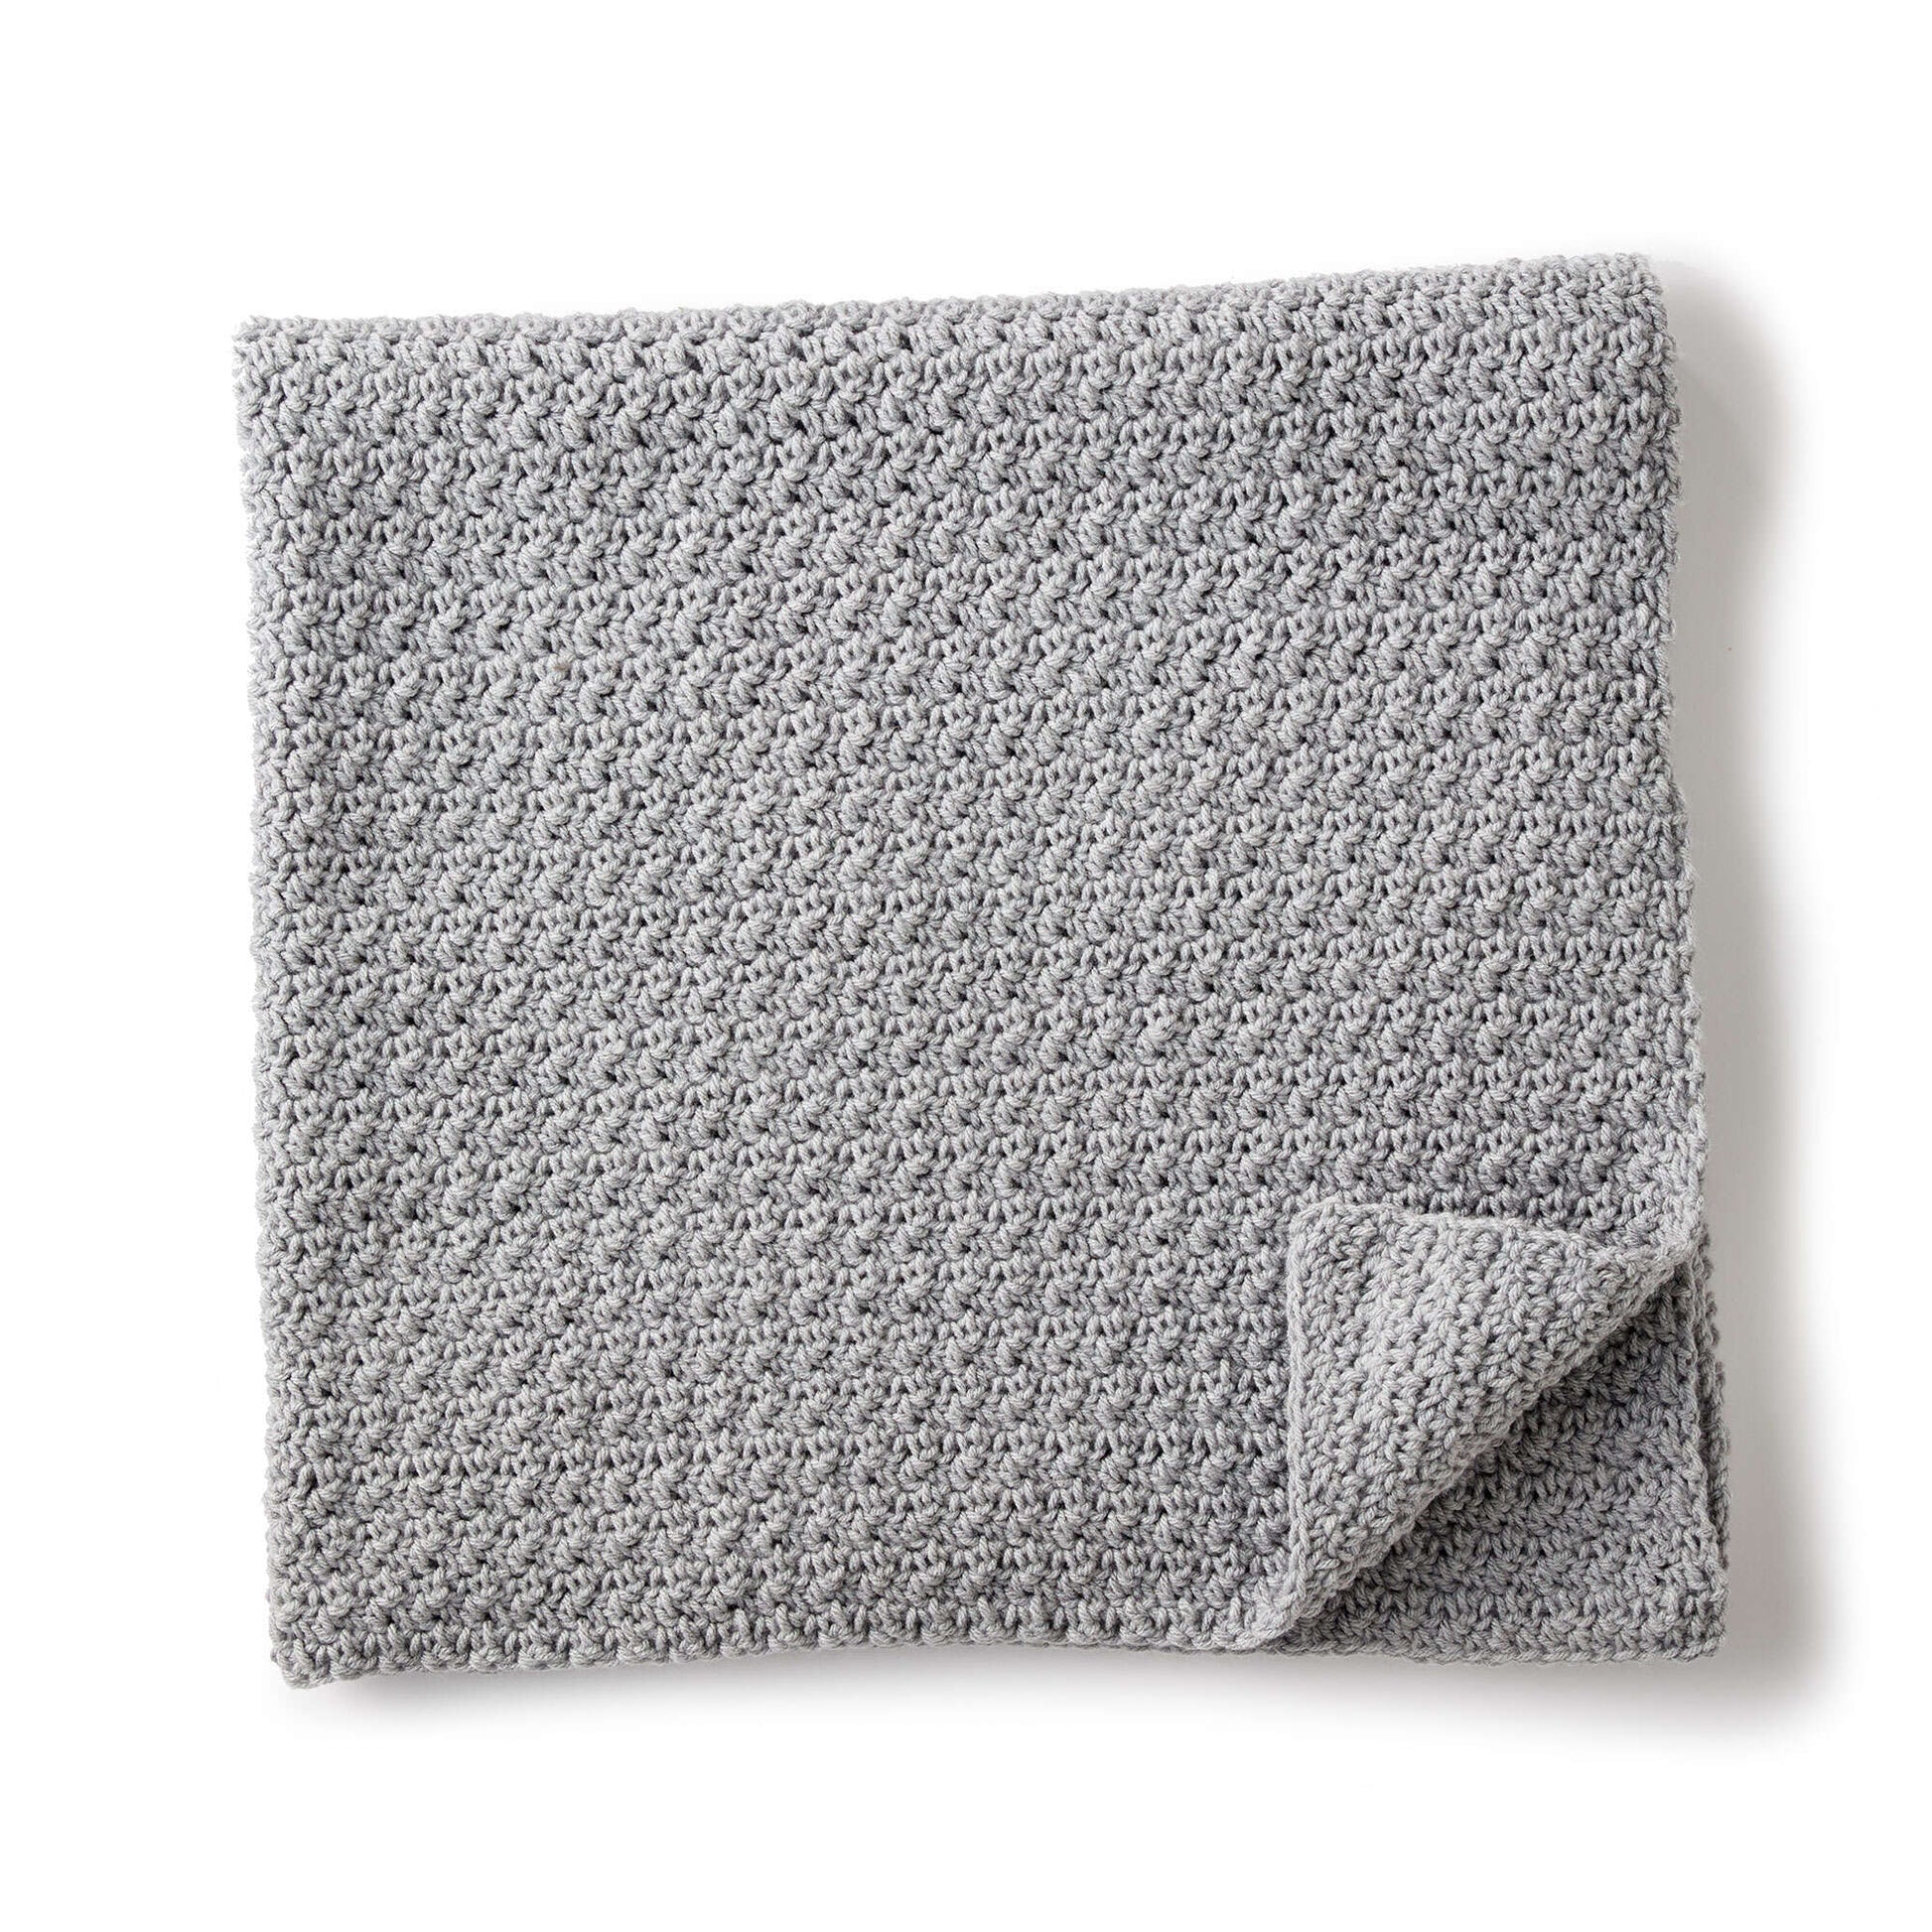 Free Caron Crochet Snuggle Pet Blanket Pattern